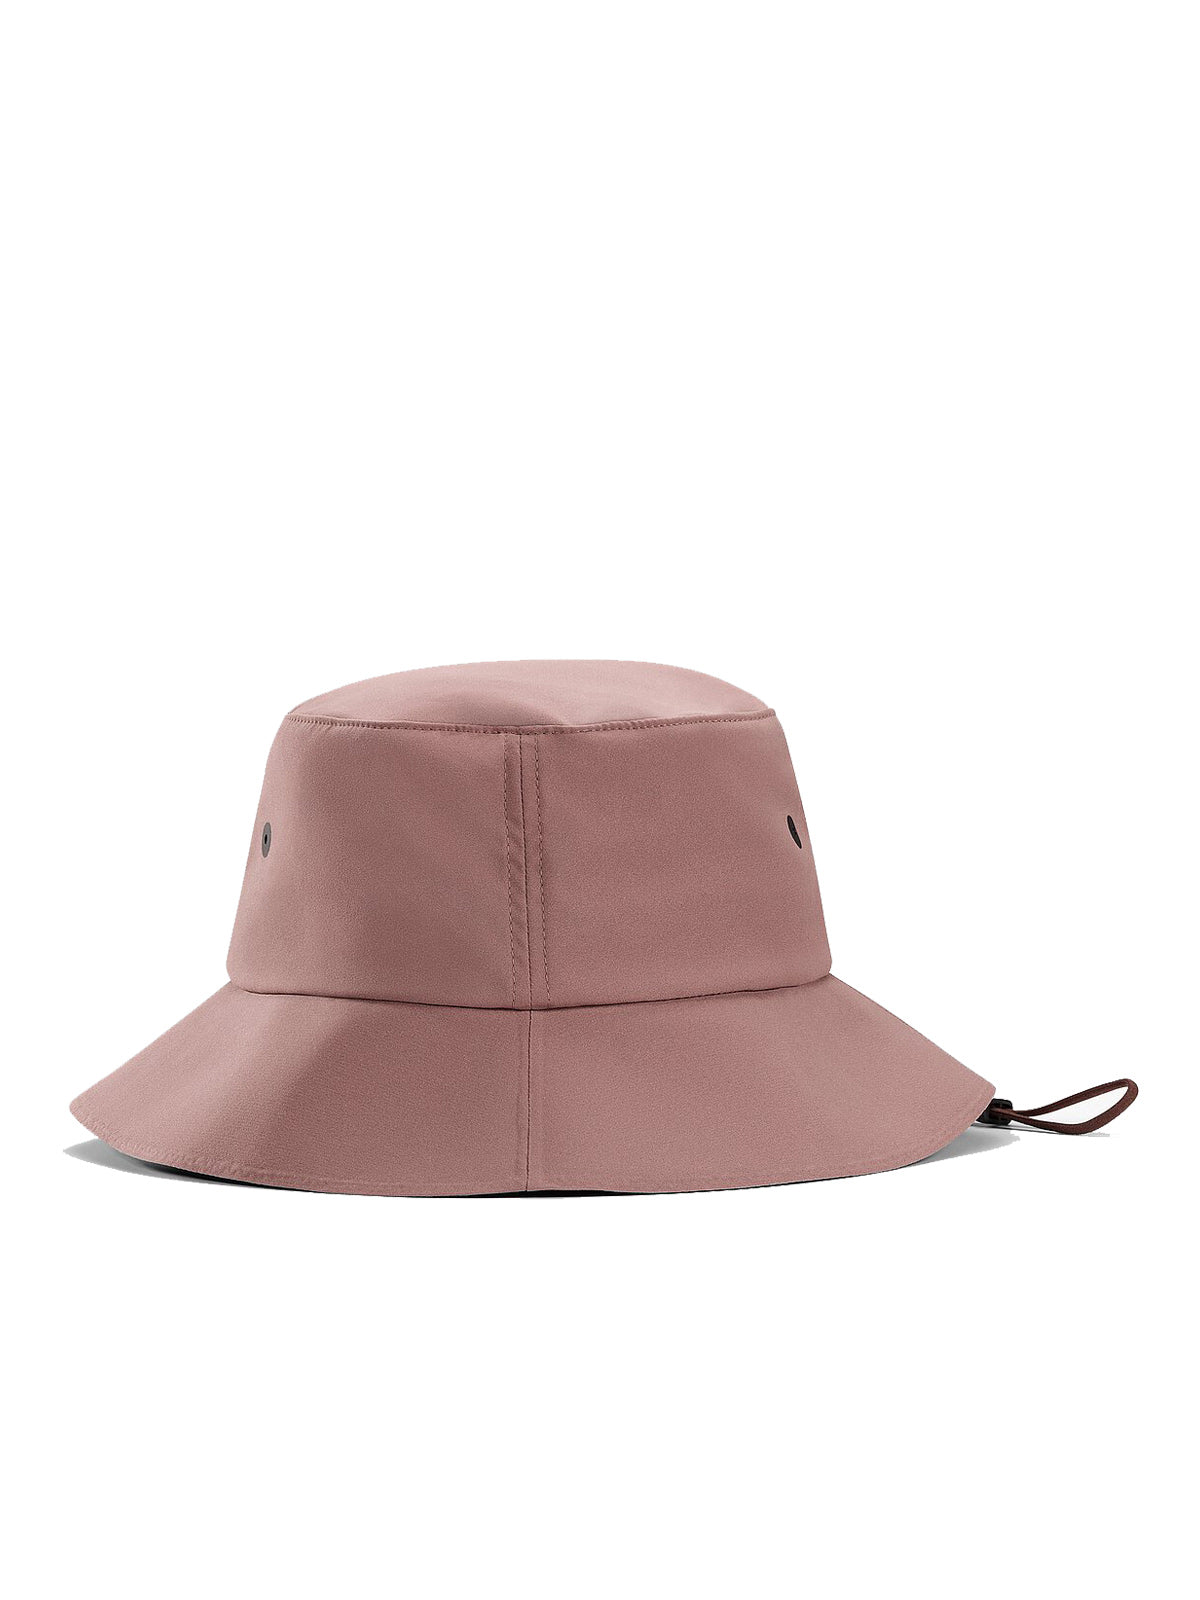 Sinsolo Hat for Men